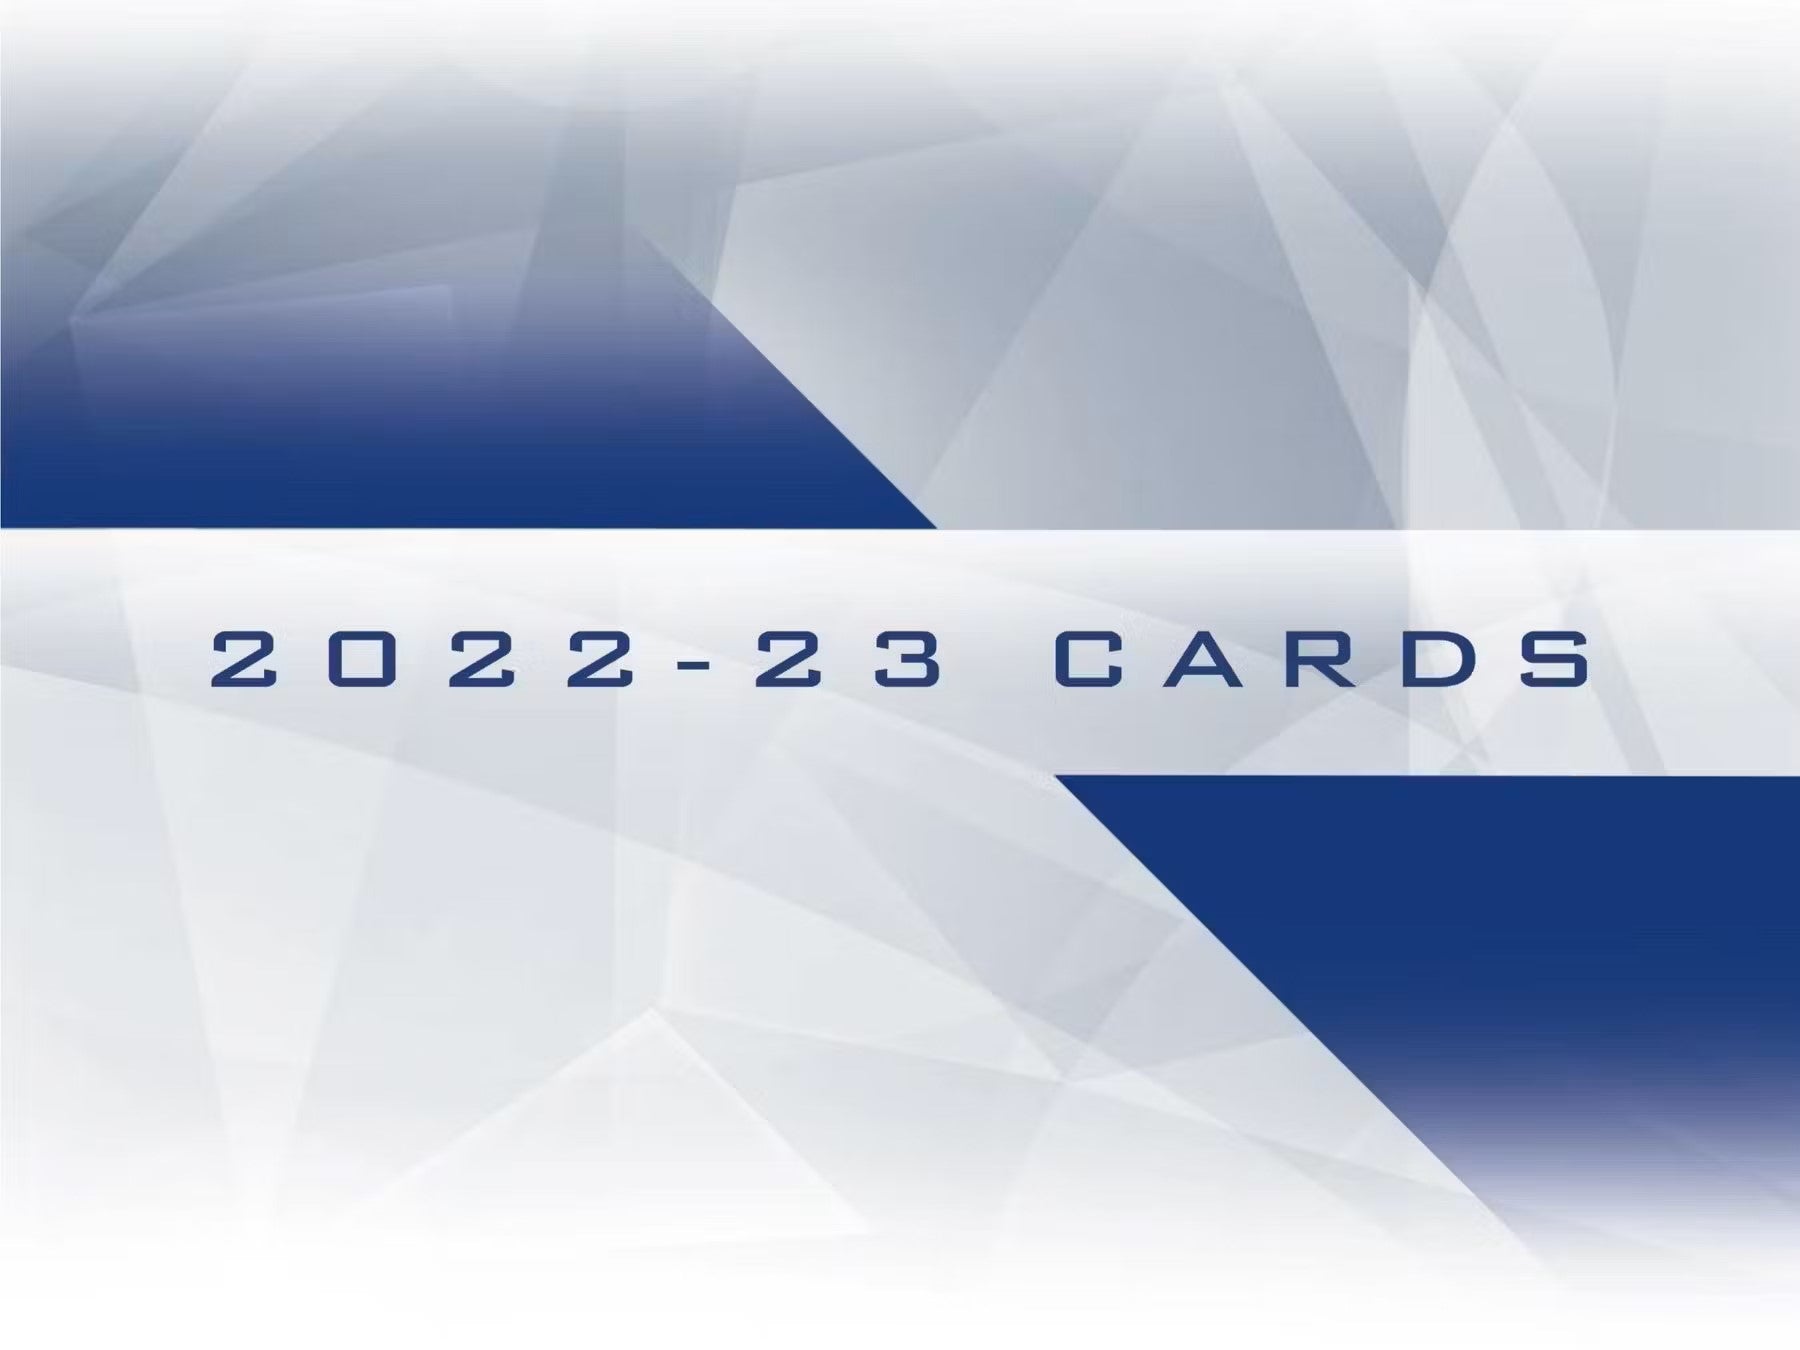 Hockey - 2022/23 - Upper Deck Clear Cut - Hobby Box (1 Card)